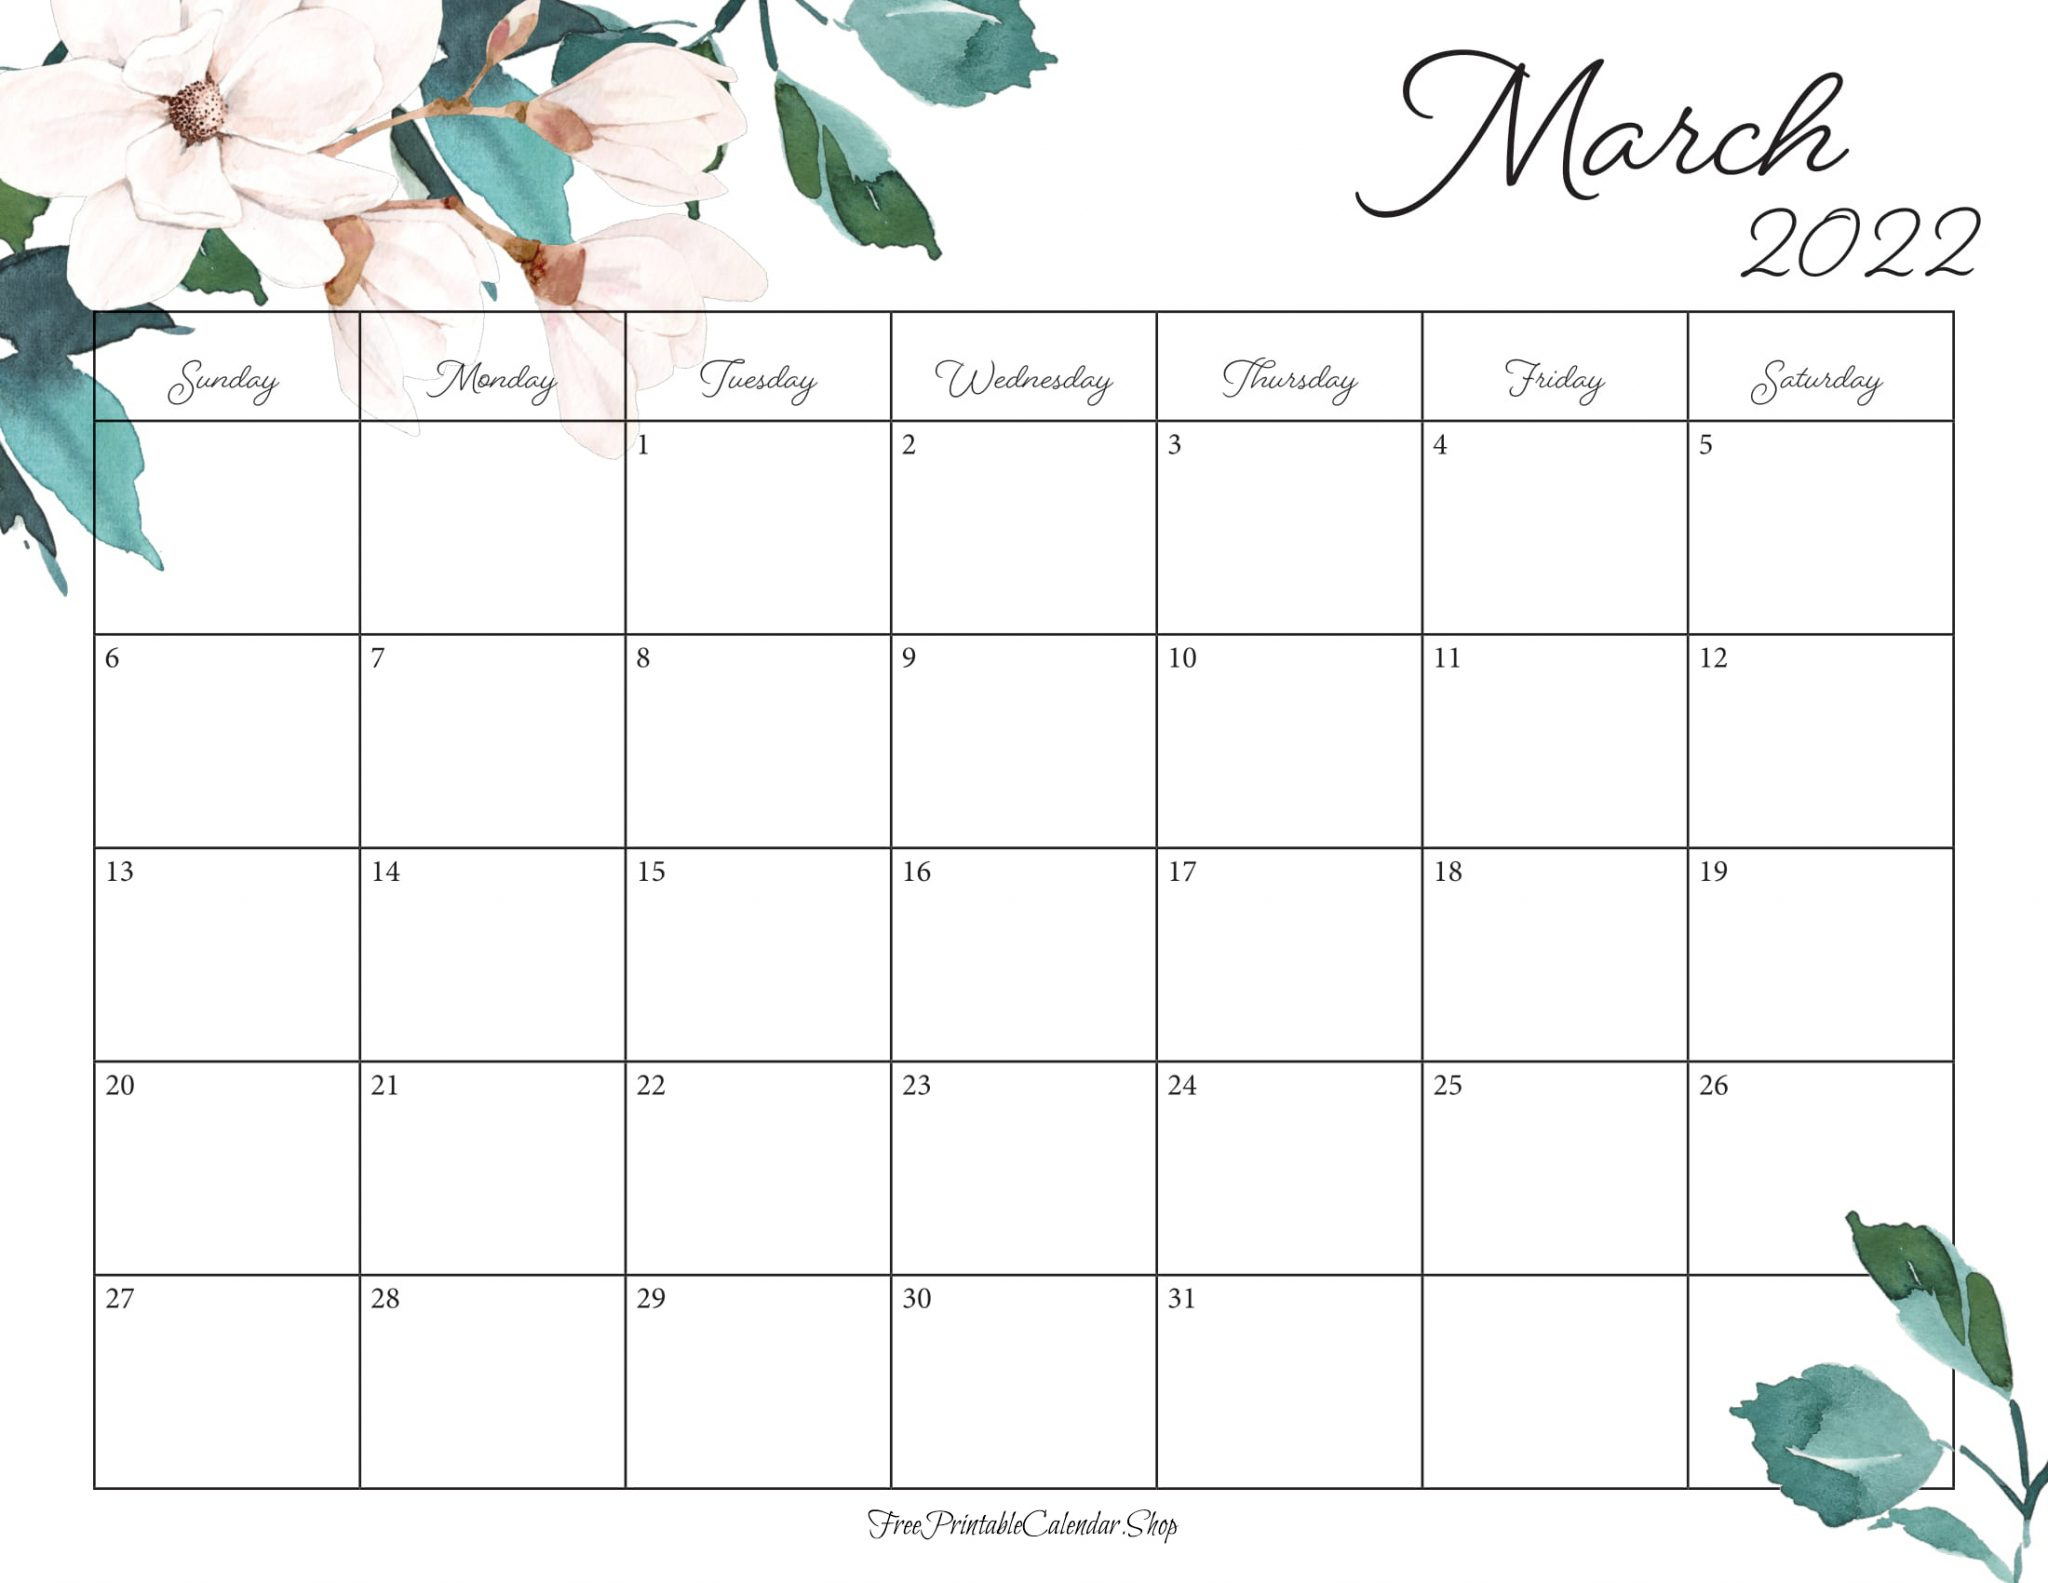 Take March 1 2022 Calendar